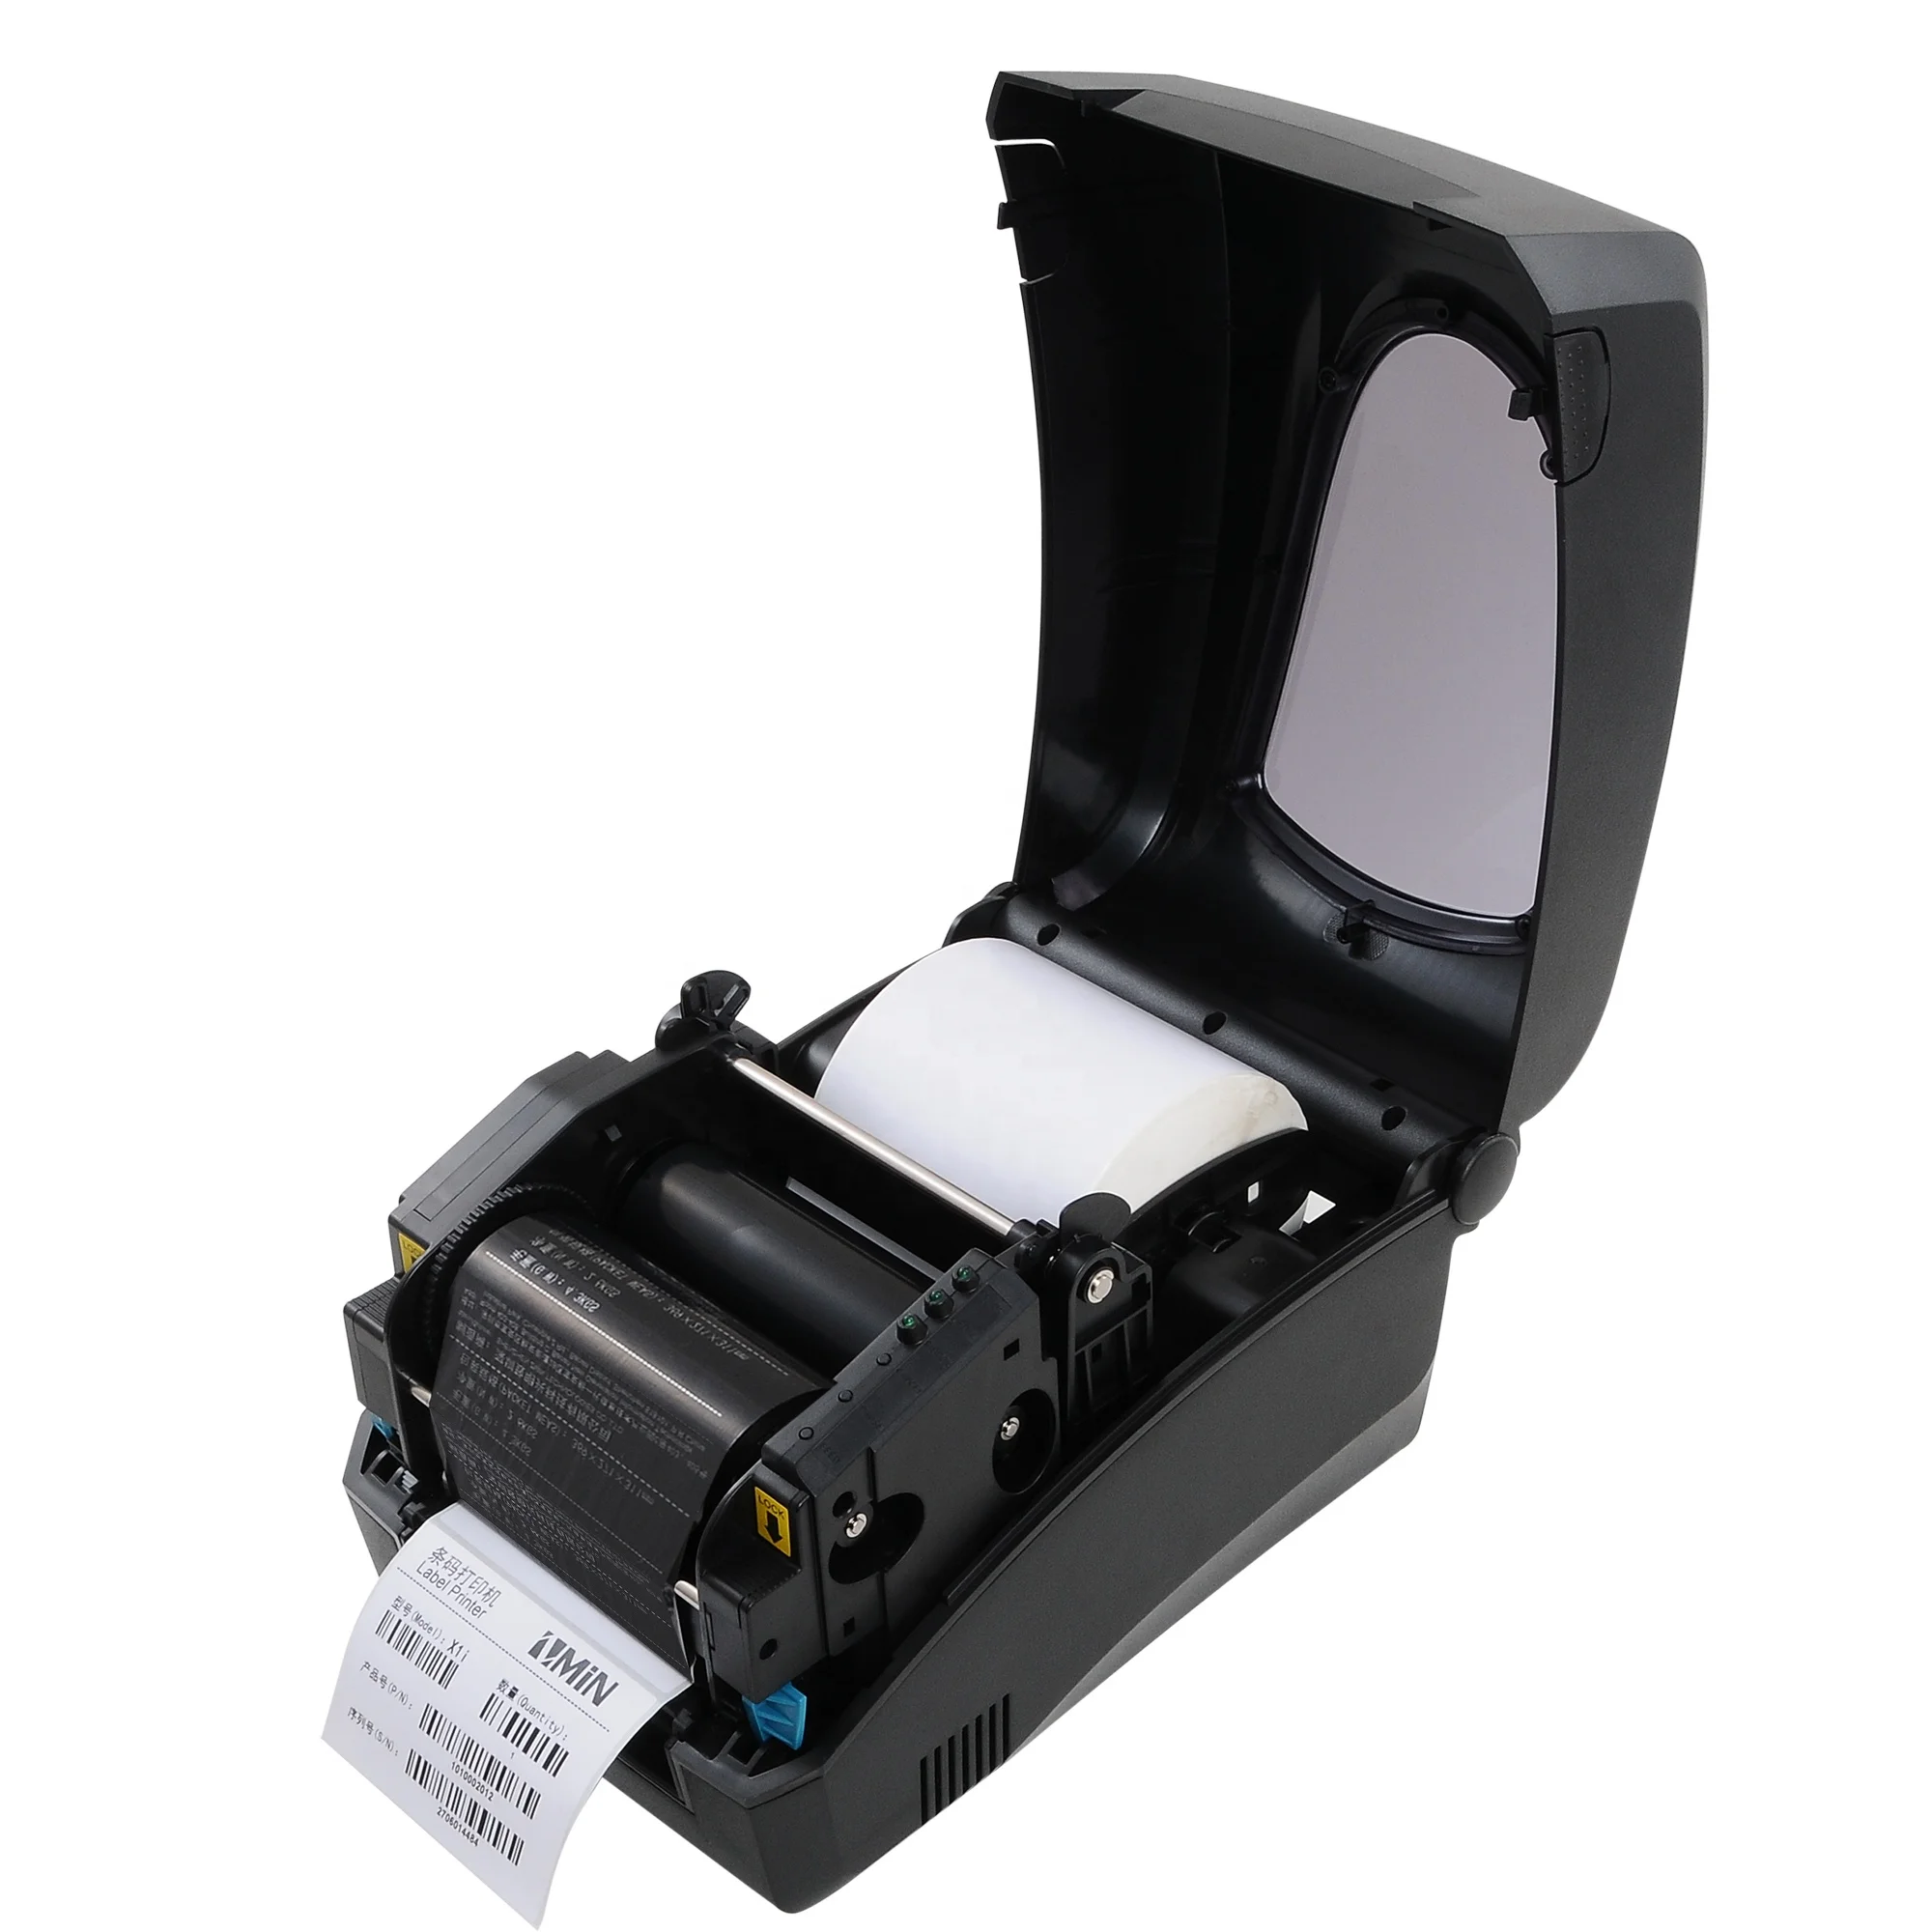 Hopeland rfid tag printer 300DPI printing speed USB tags printer rfid label Industrial UHF RFID Printer